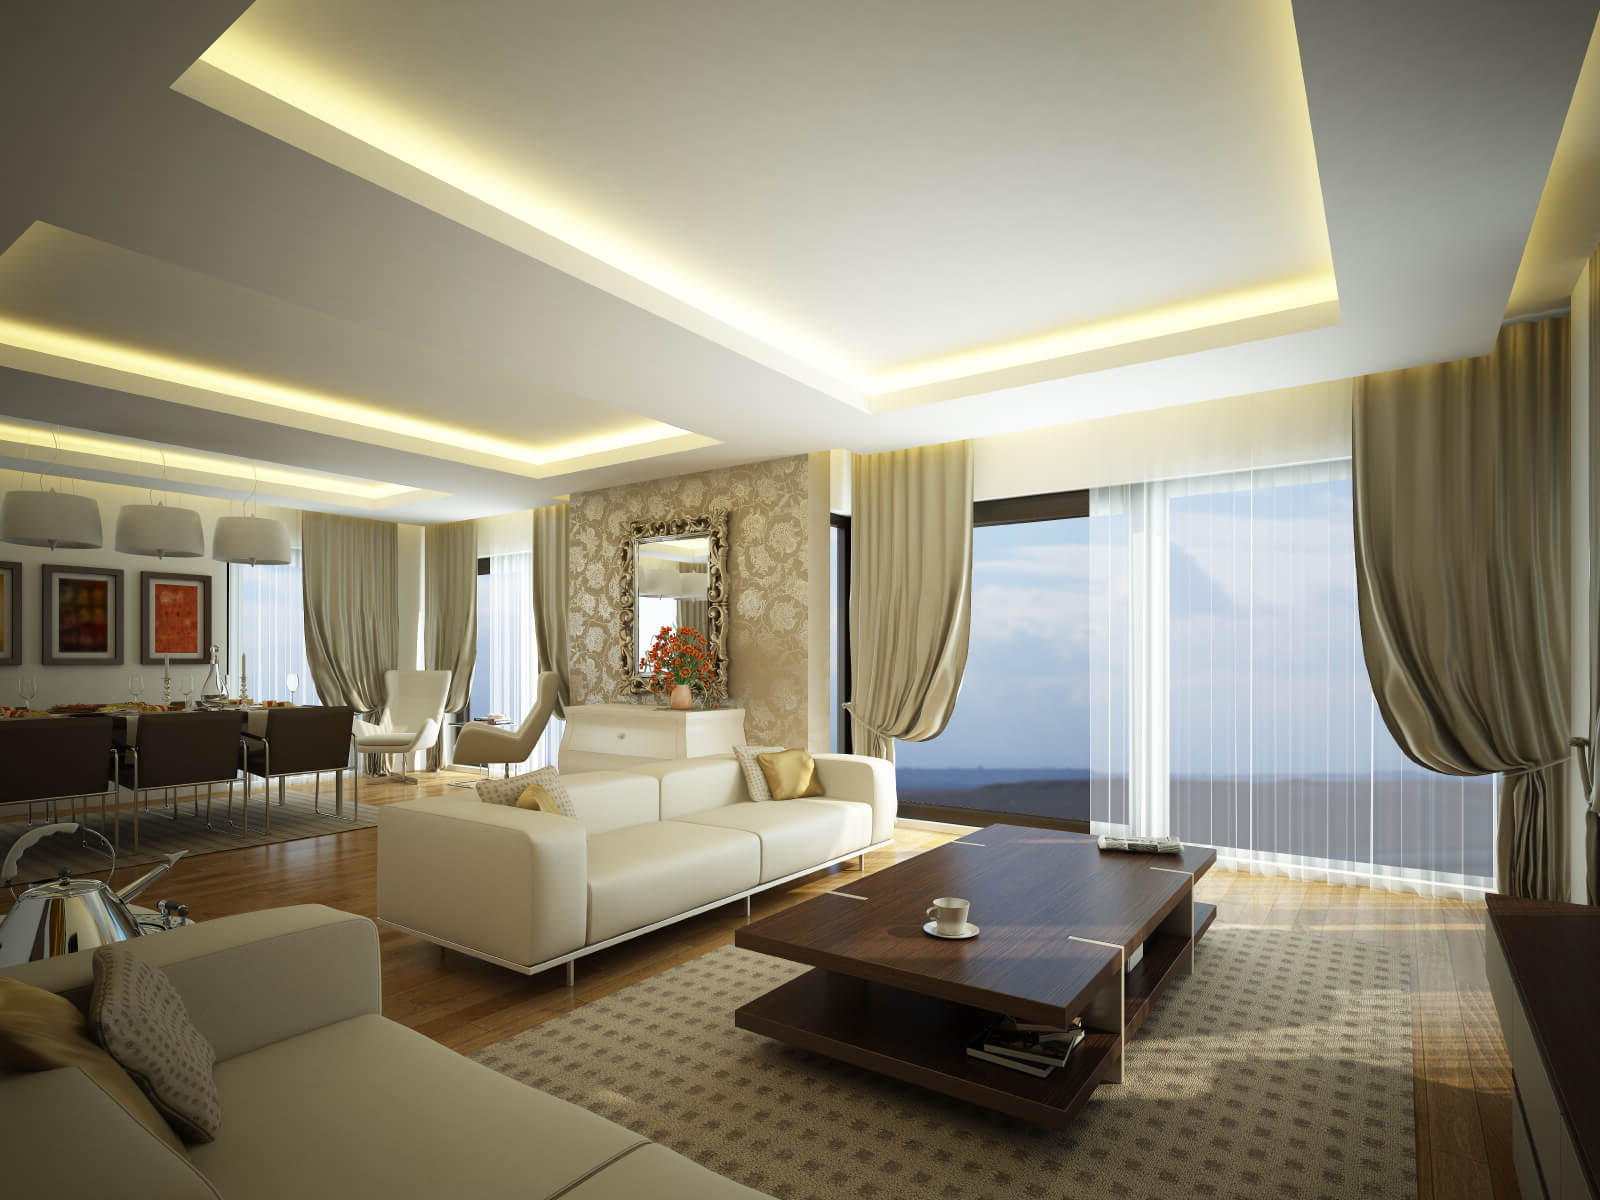 Living Room Lighting Ideas For Low Ceilings